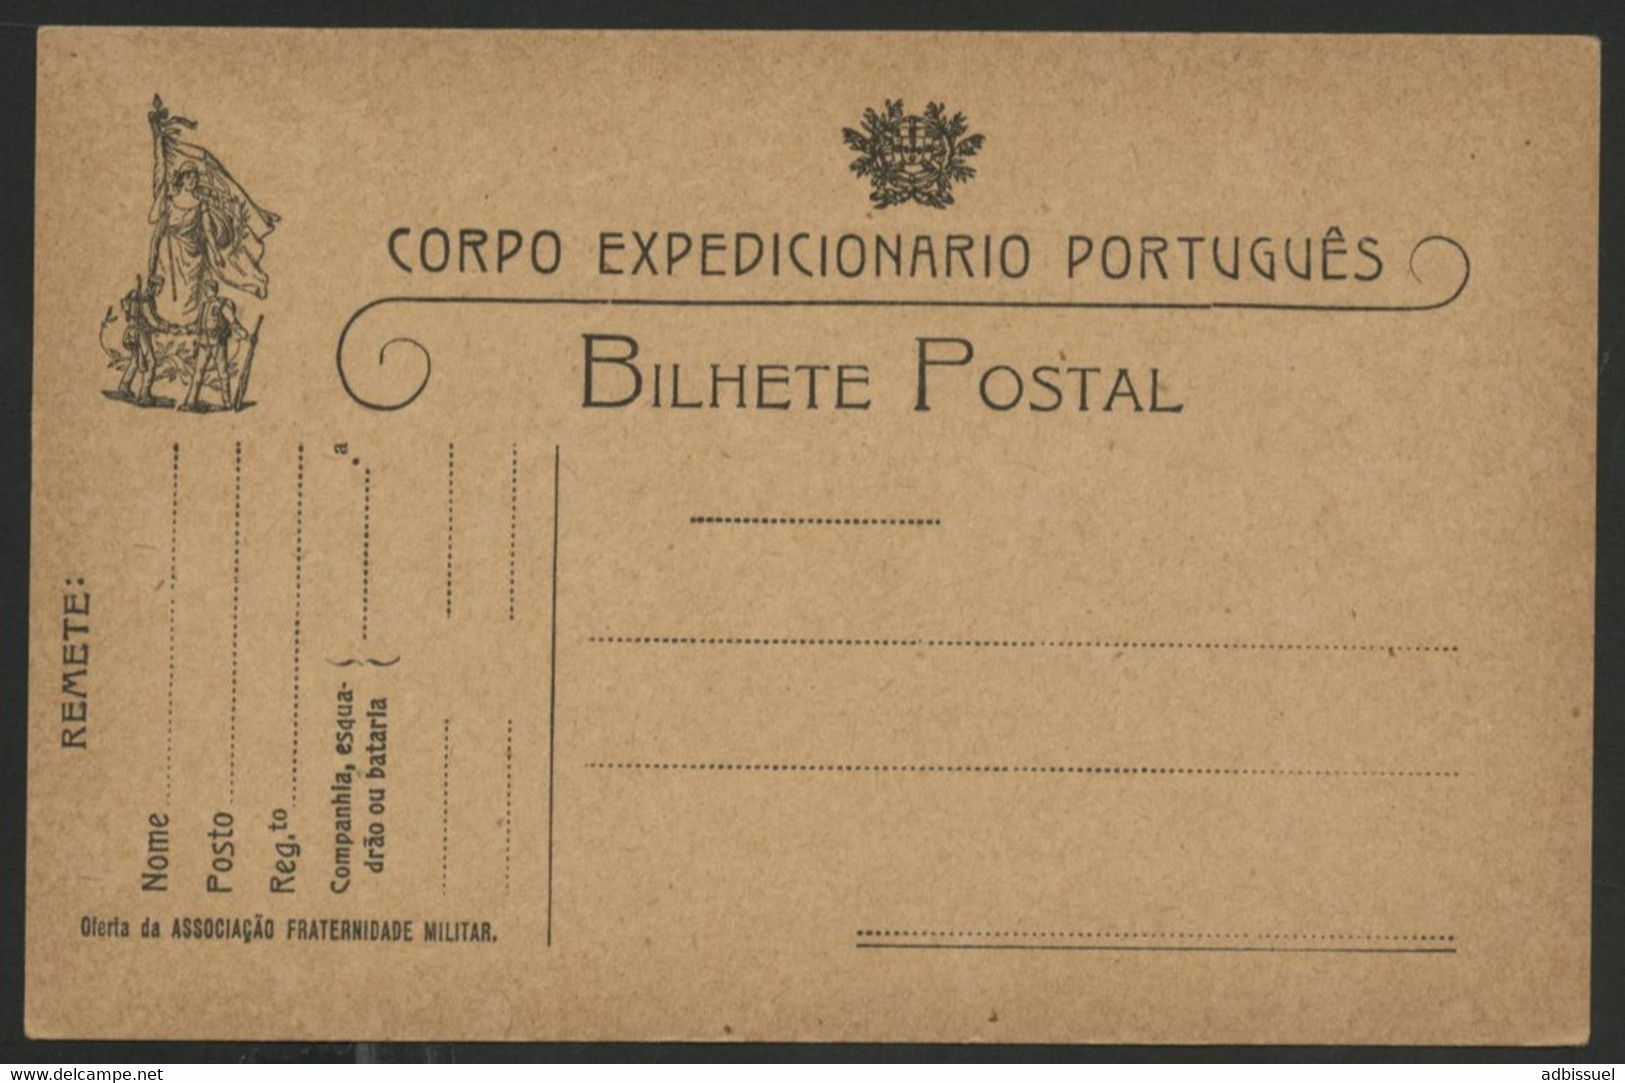 GUERRE 1914 - 1918 CORPO EXPEDICIONARIO PORTUGUES CORPS EXPEDITIONNAIRE PORTUGAIS - Guerre Mondiale (Première)